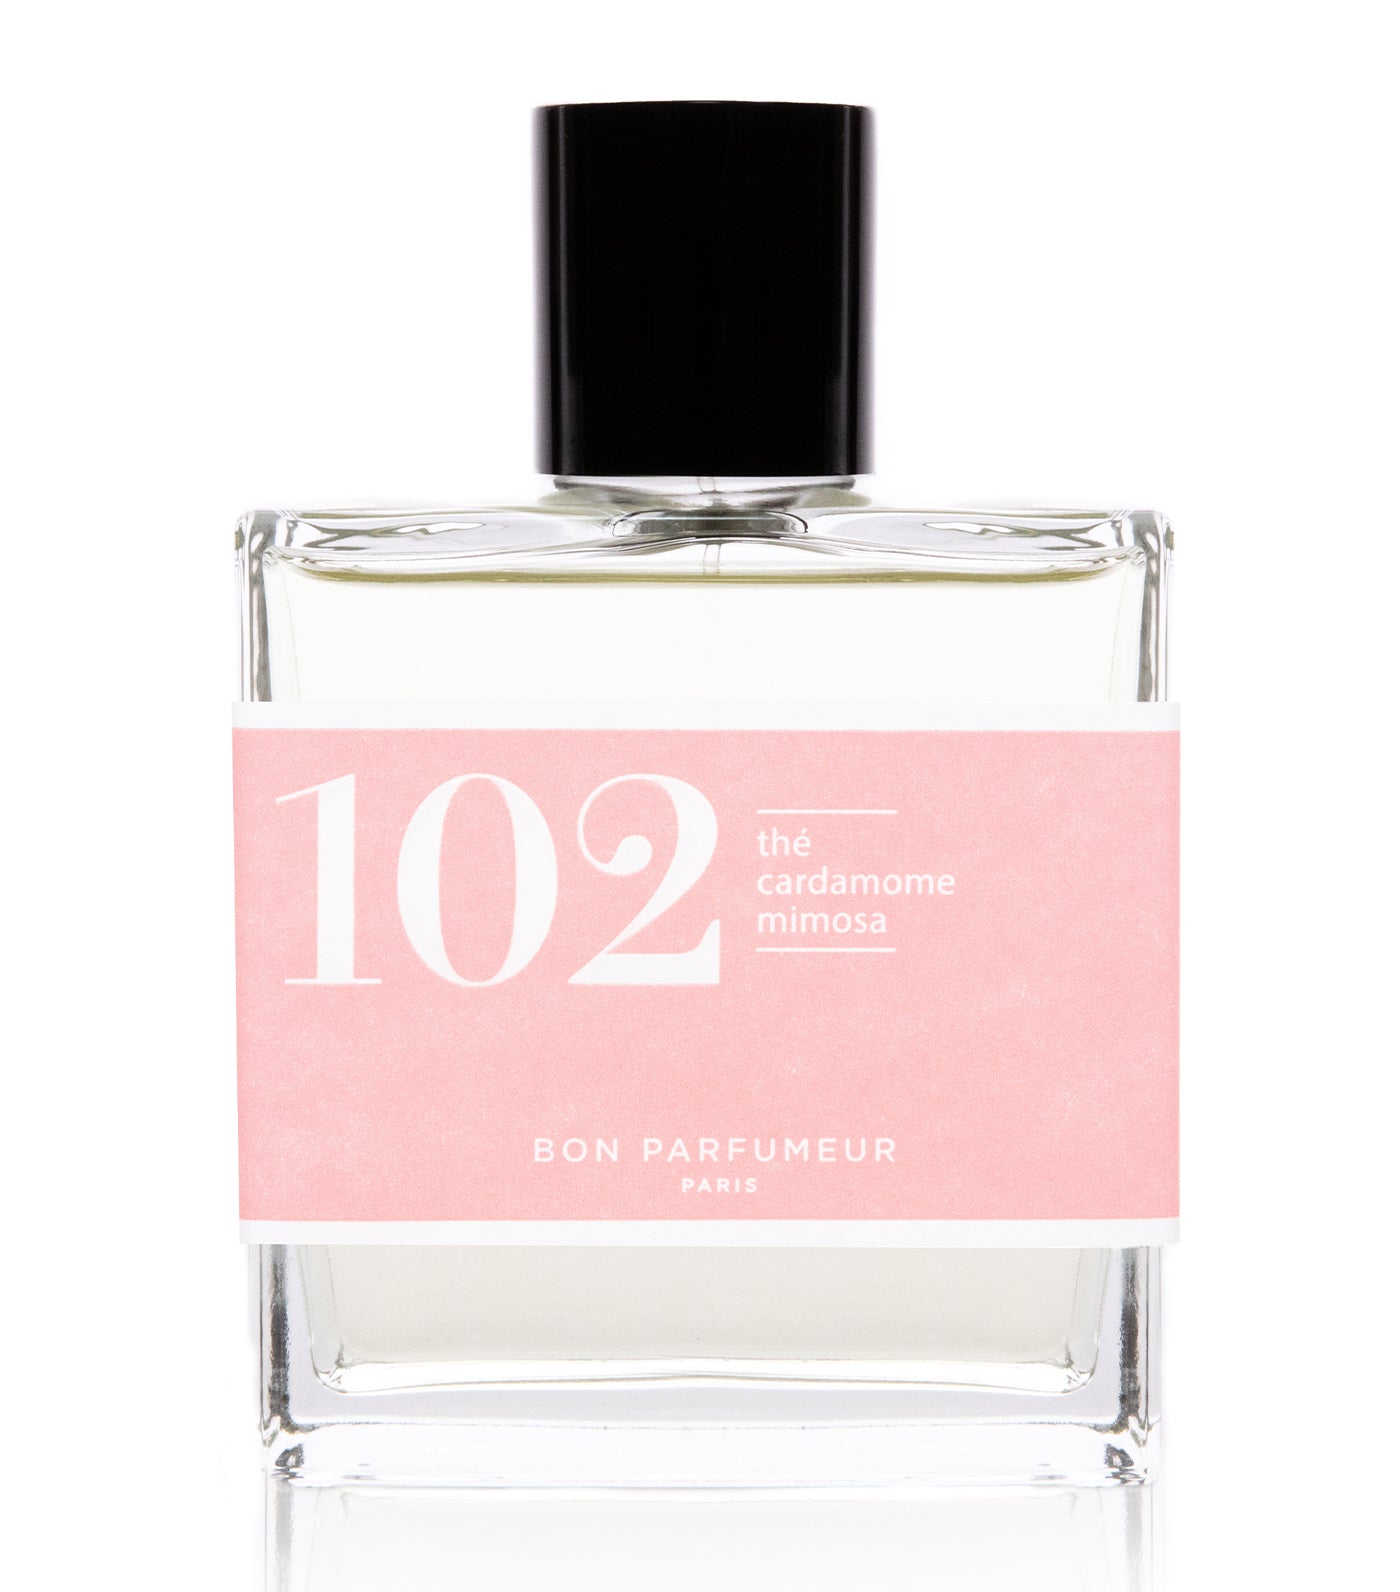 Eau de parfum 102 : tea, cardamom and mimosa